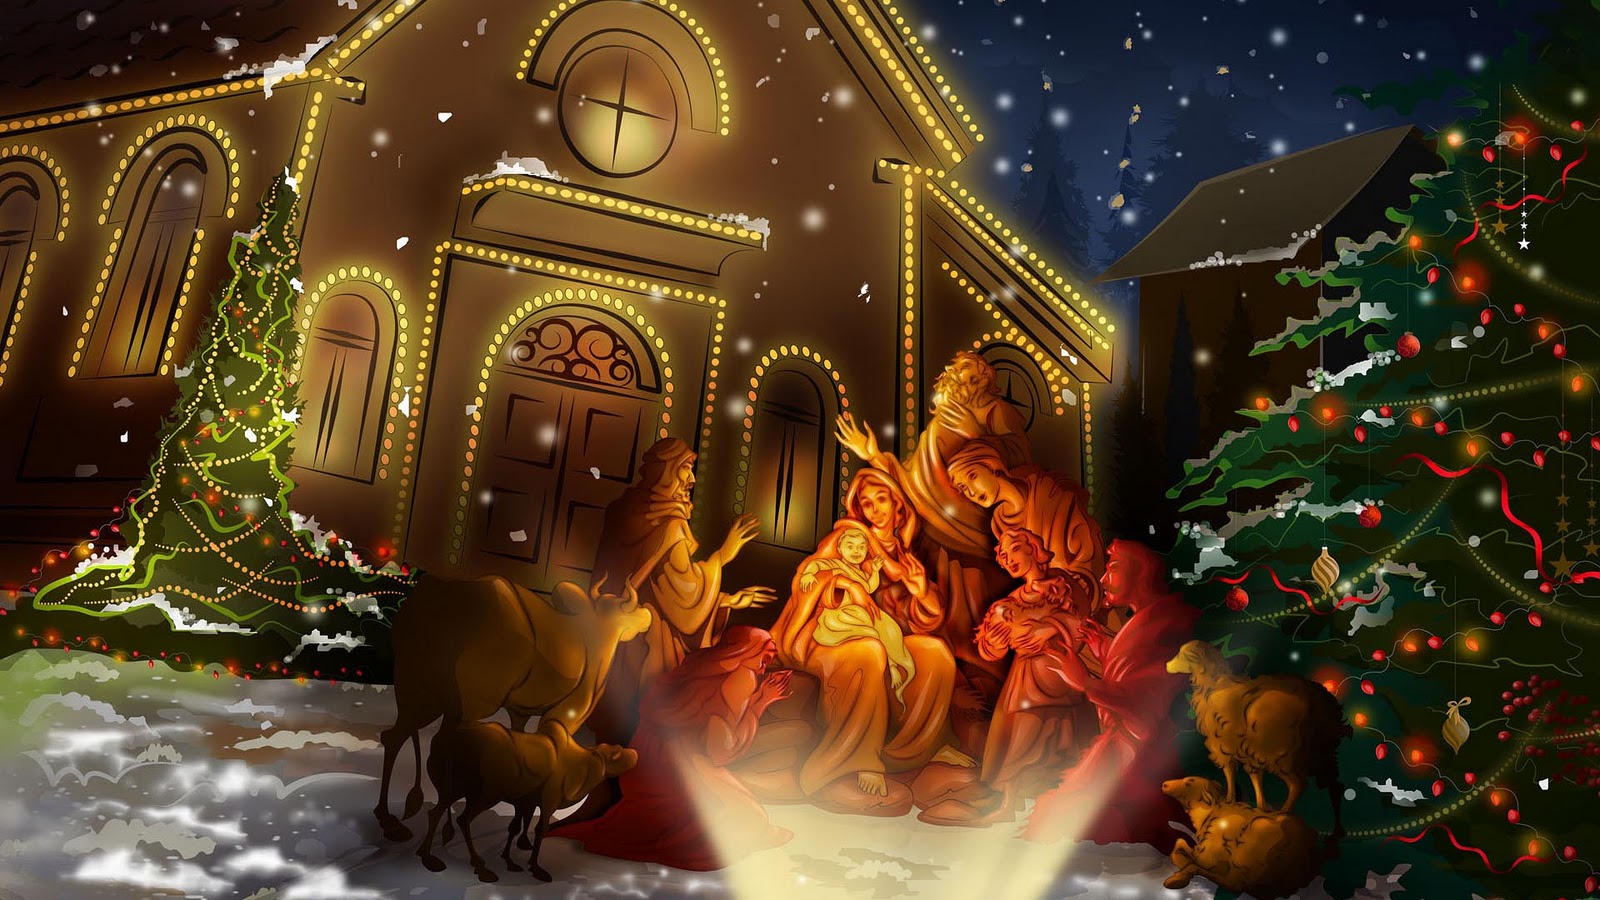 Wallpapers Hd Navidad - Christmas Scene Facebook Cover , HD Wallpaper & Backgrounds